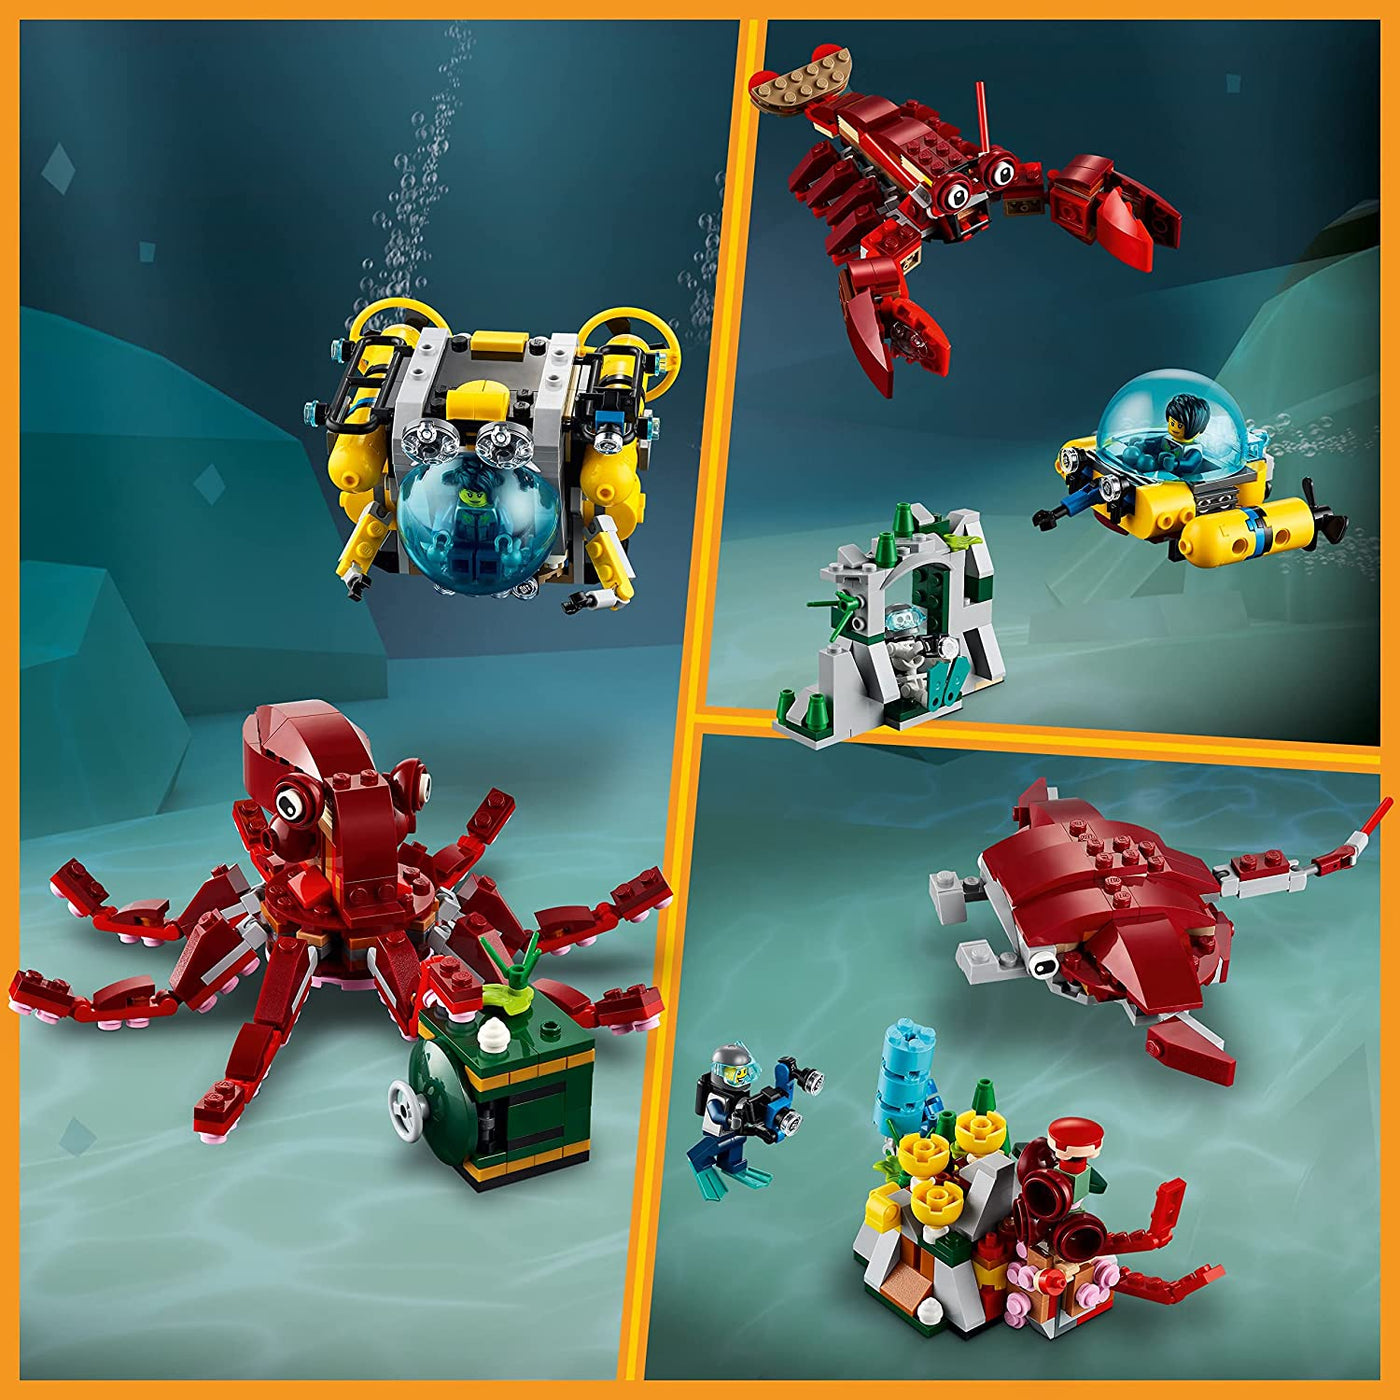 LEGO® Creator 3in1 #31130: Sunken Treasure Mission